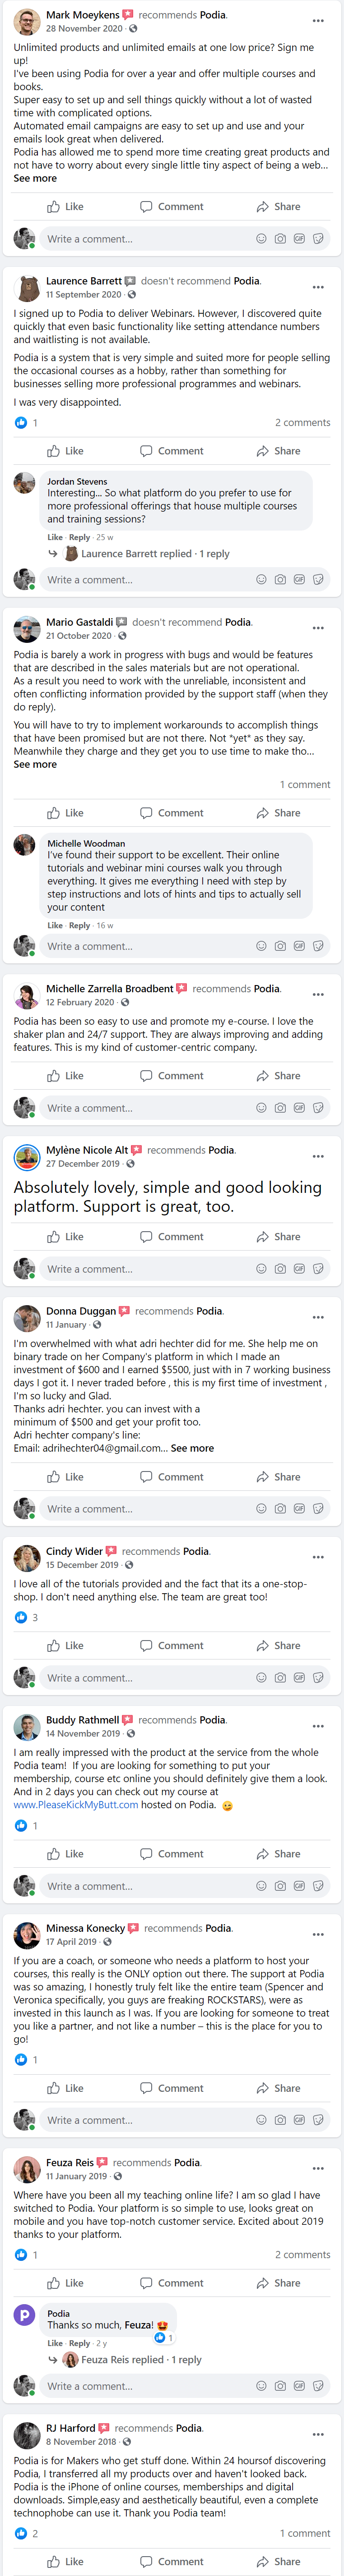 Podia facebook review